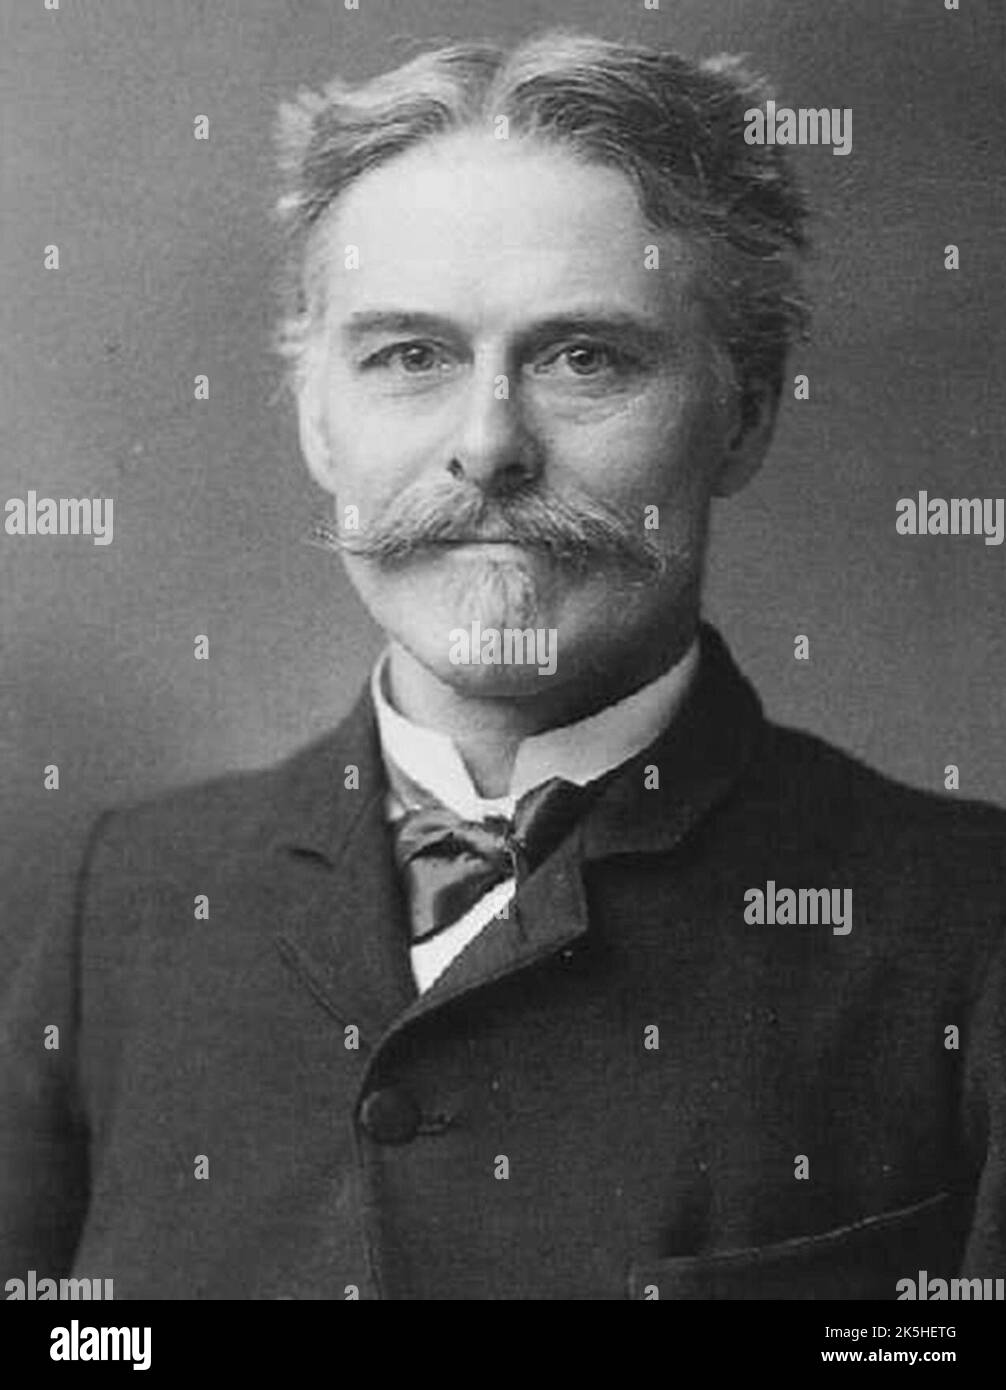 Edward Drinker Cope (28 de julio de 1840 – 12 de abril de 1897) fue un zoólogo, paleontólogo, anatomista comparativo, herpetólogo e ictiólogo estadounidense. Foto de stock